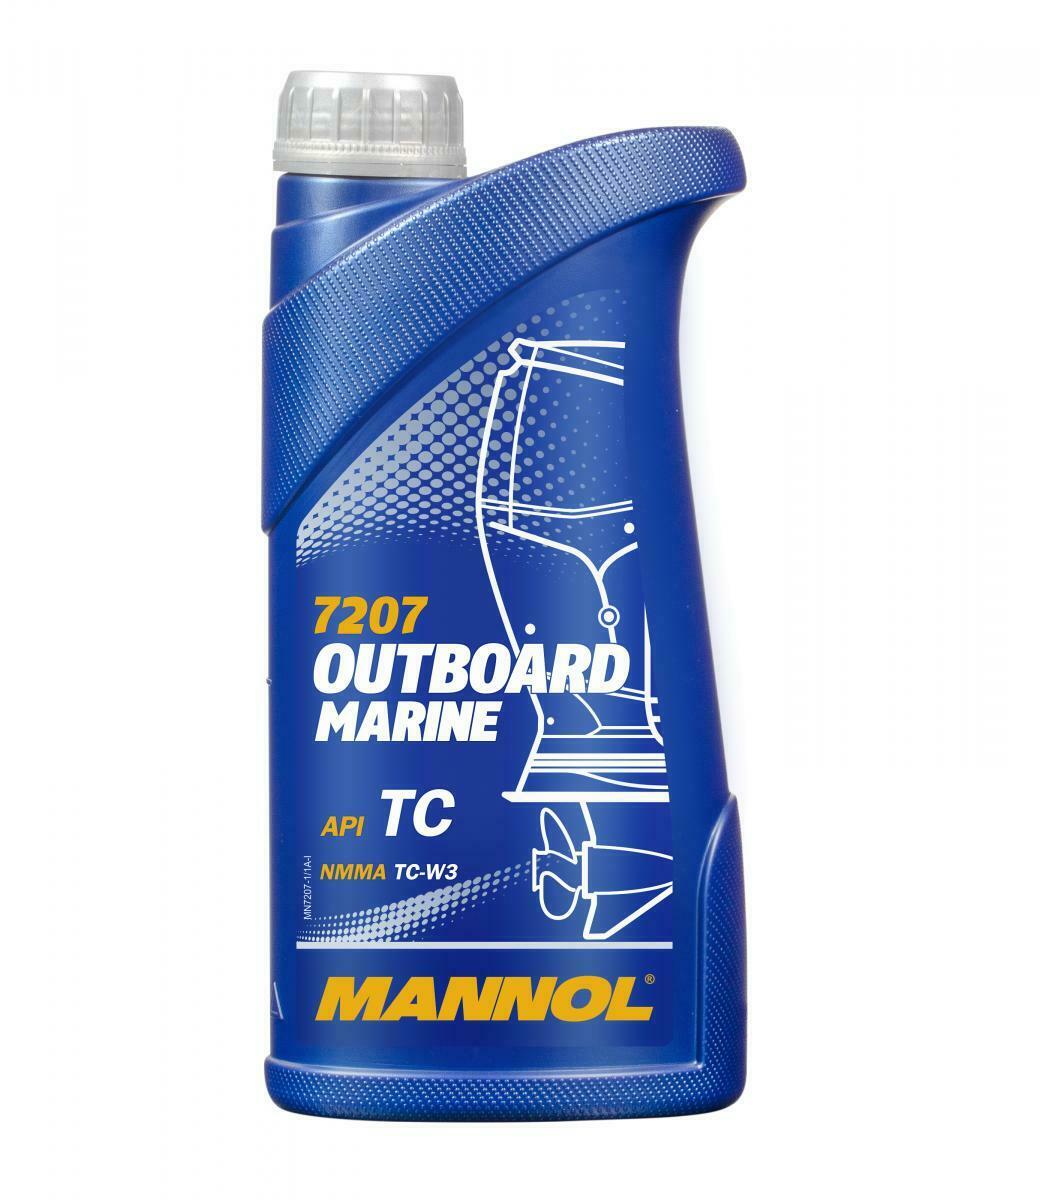 1 Liter MANNOL Outboard Marine API TC Motoröl Außenbordmotoröl